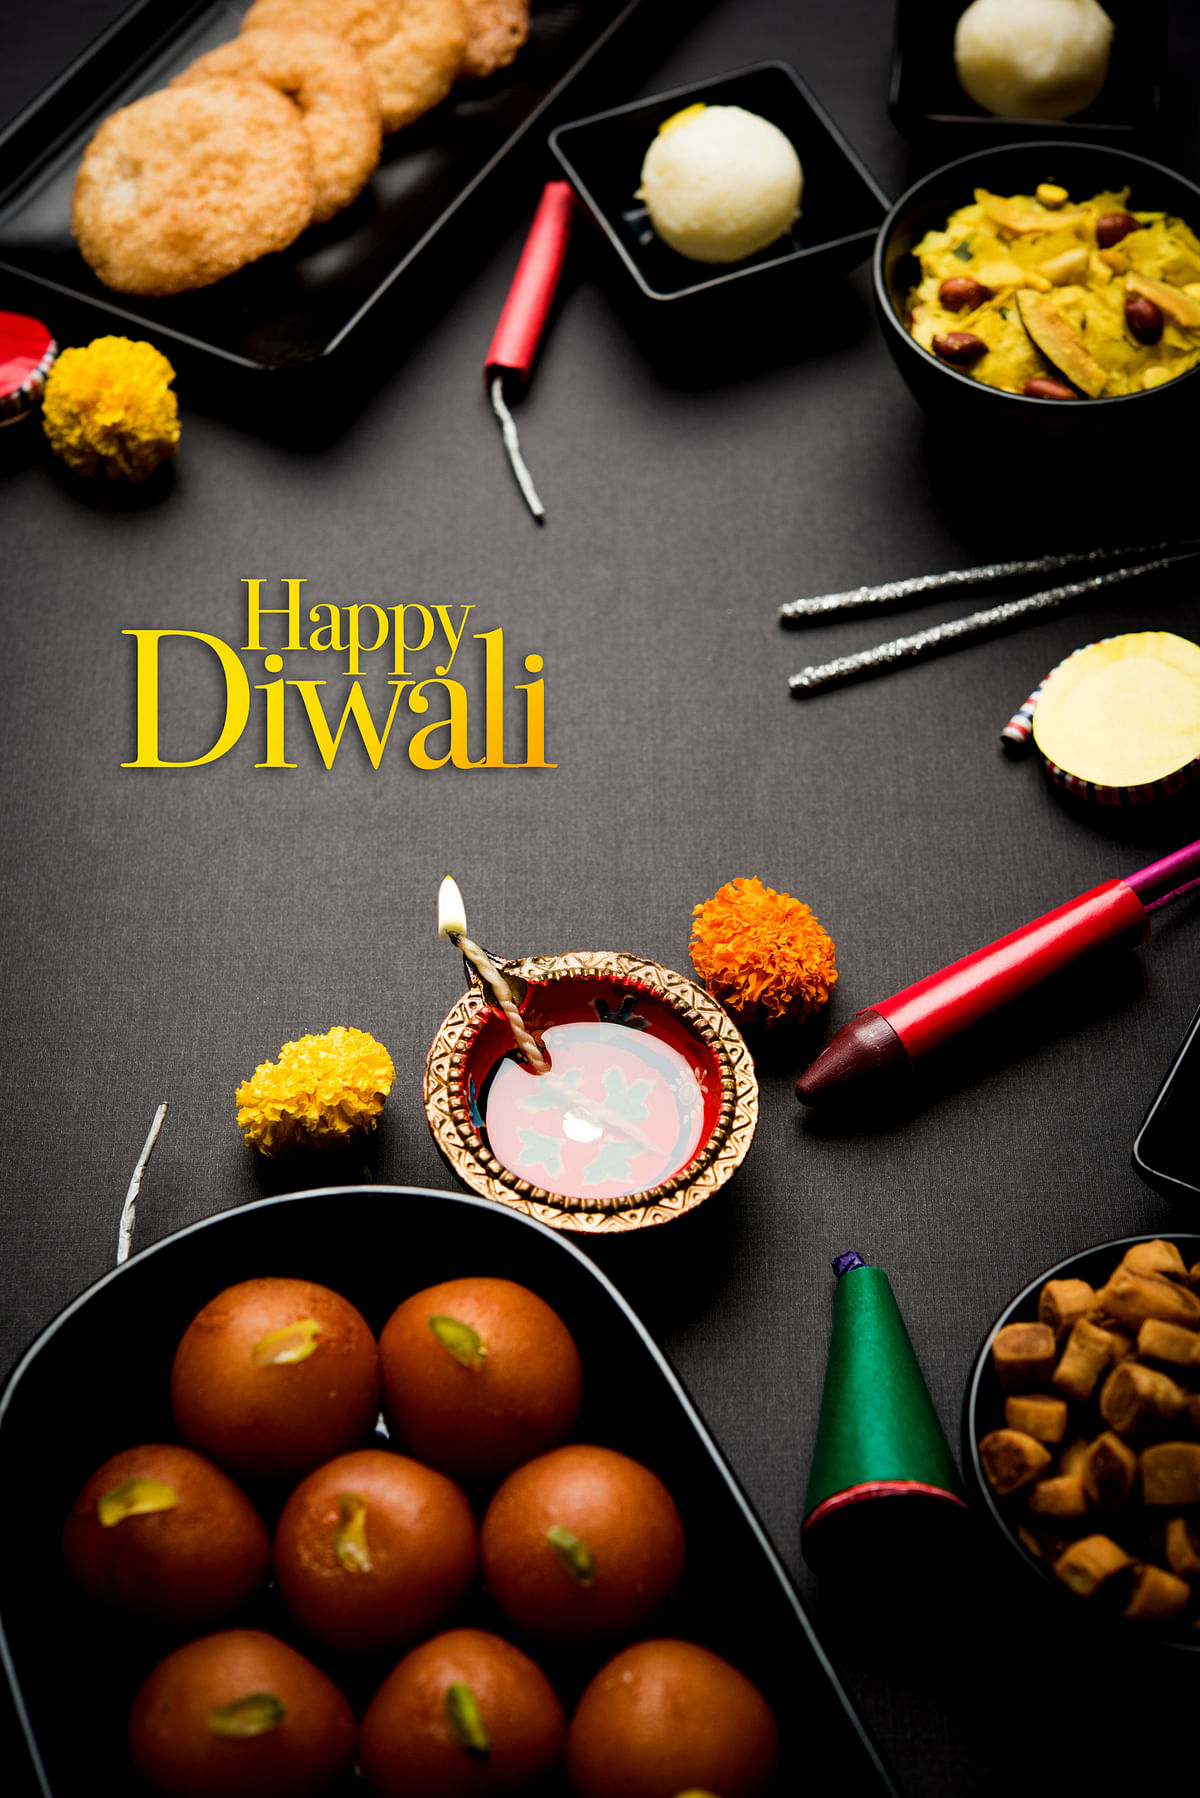 Happy Diwali 2019 Wishes in Hindi,English: Deepavali Status, Images HD